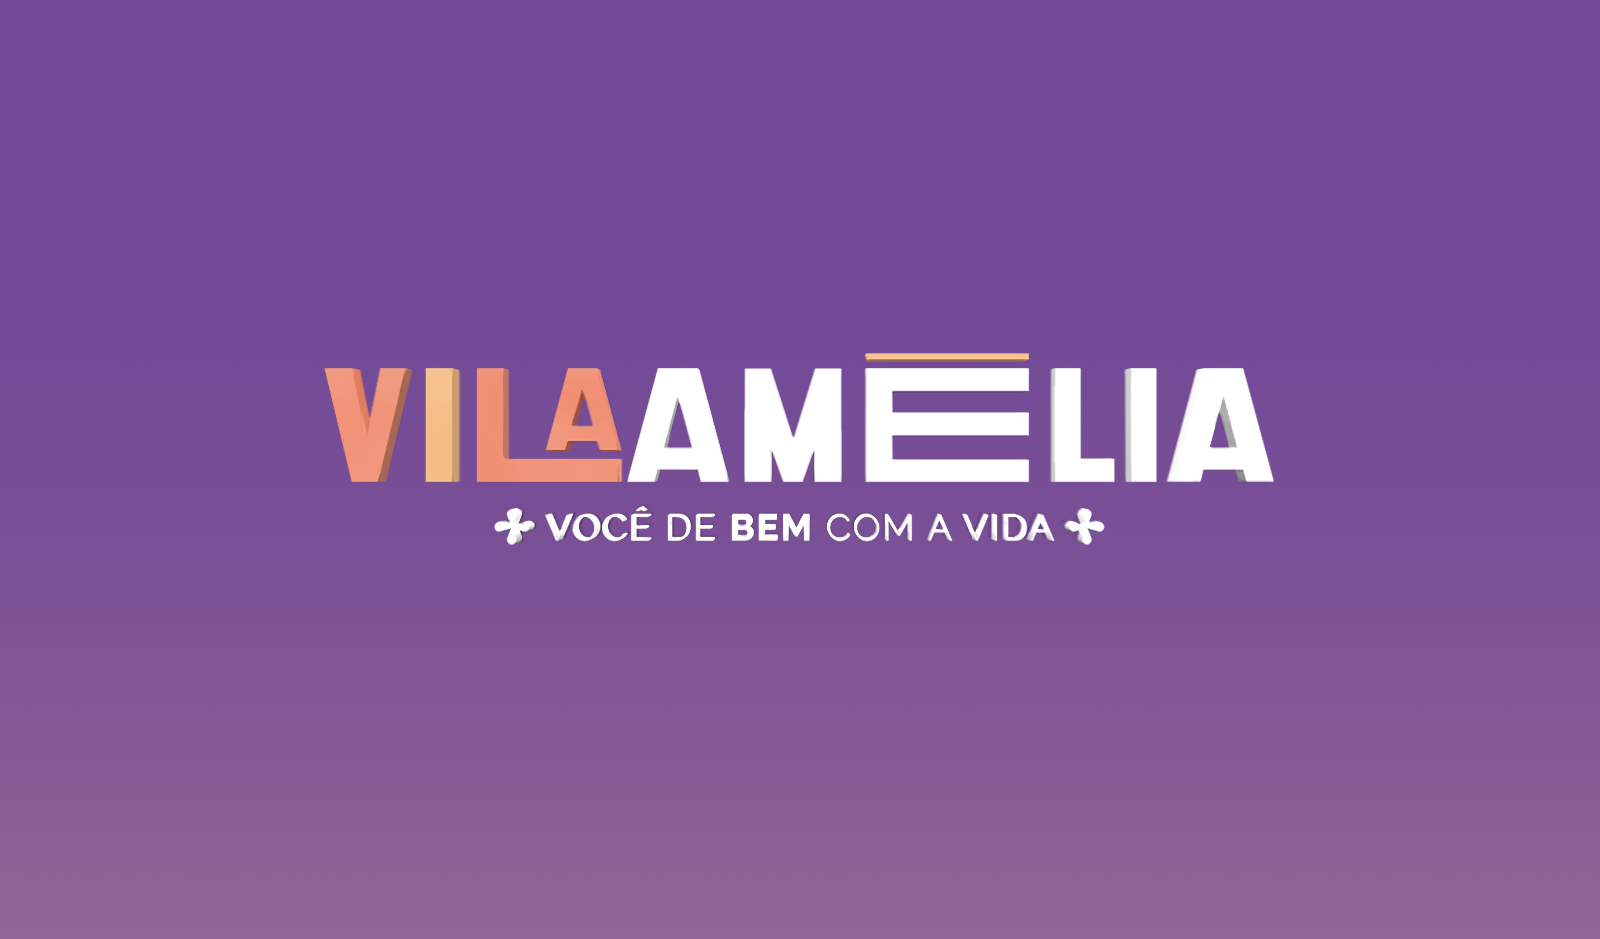 Vila Amélia